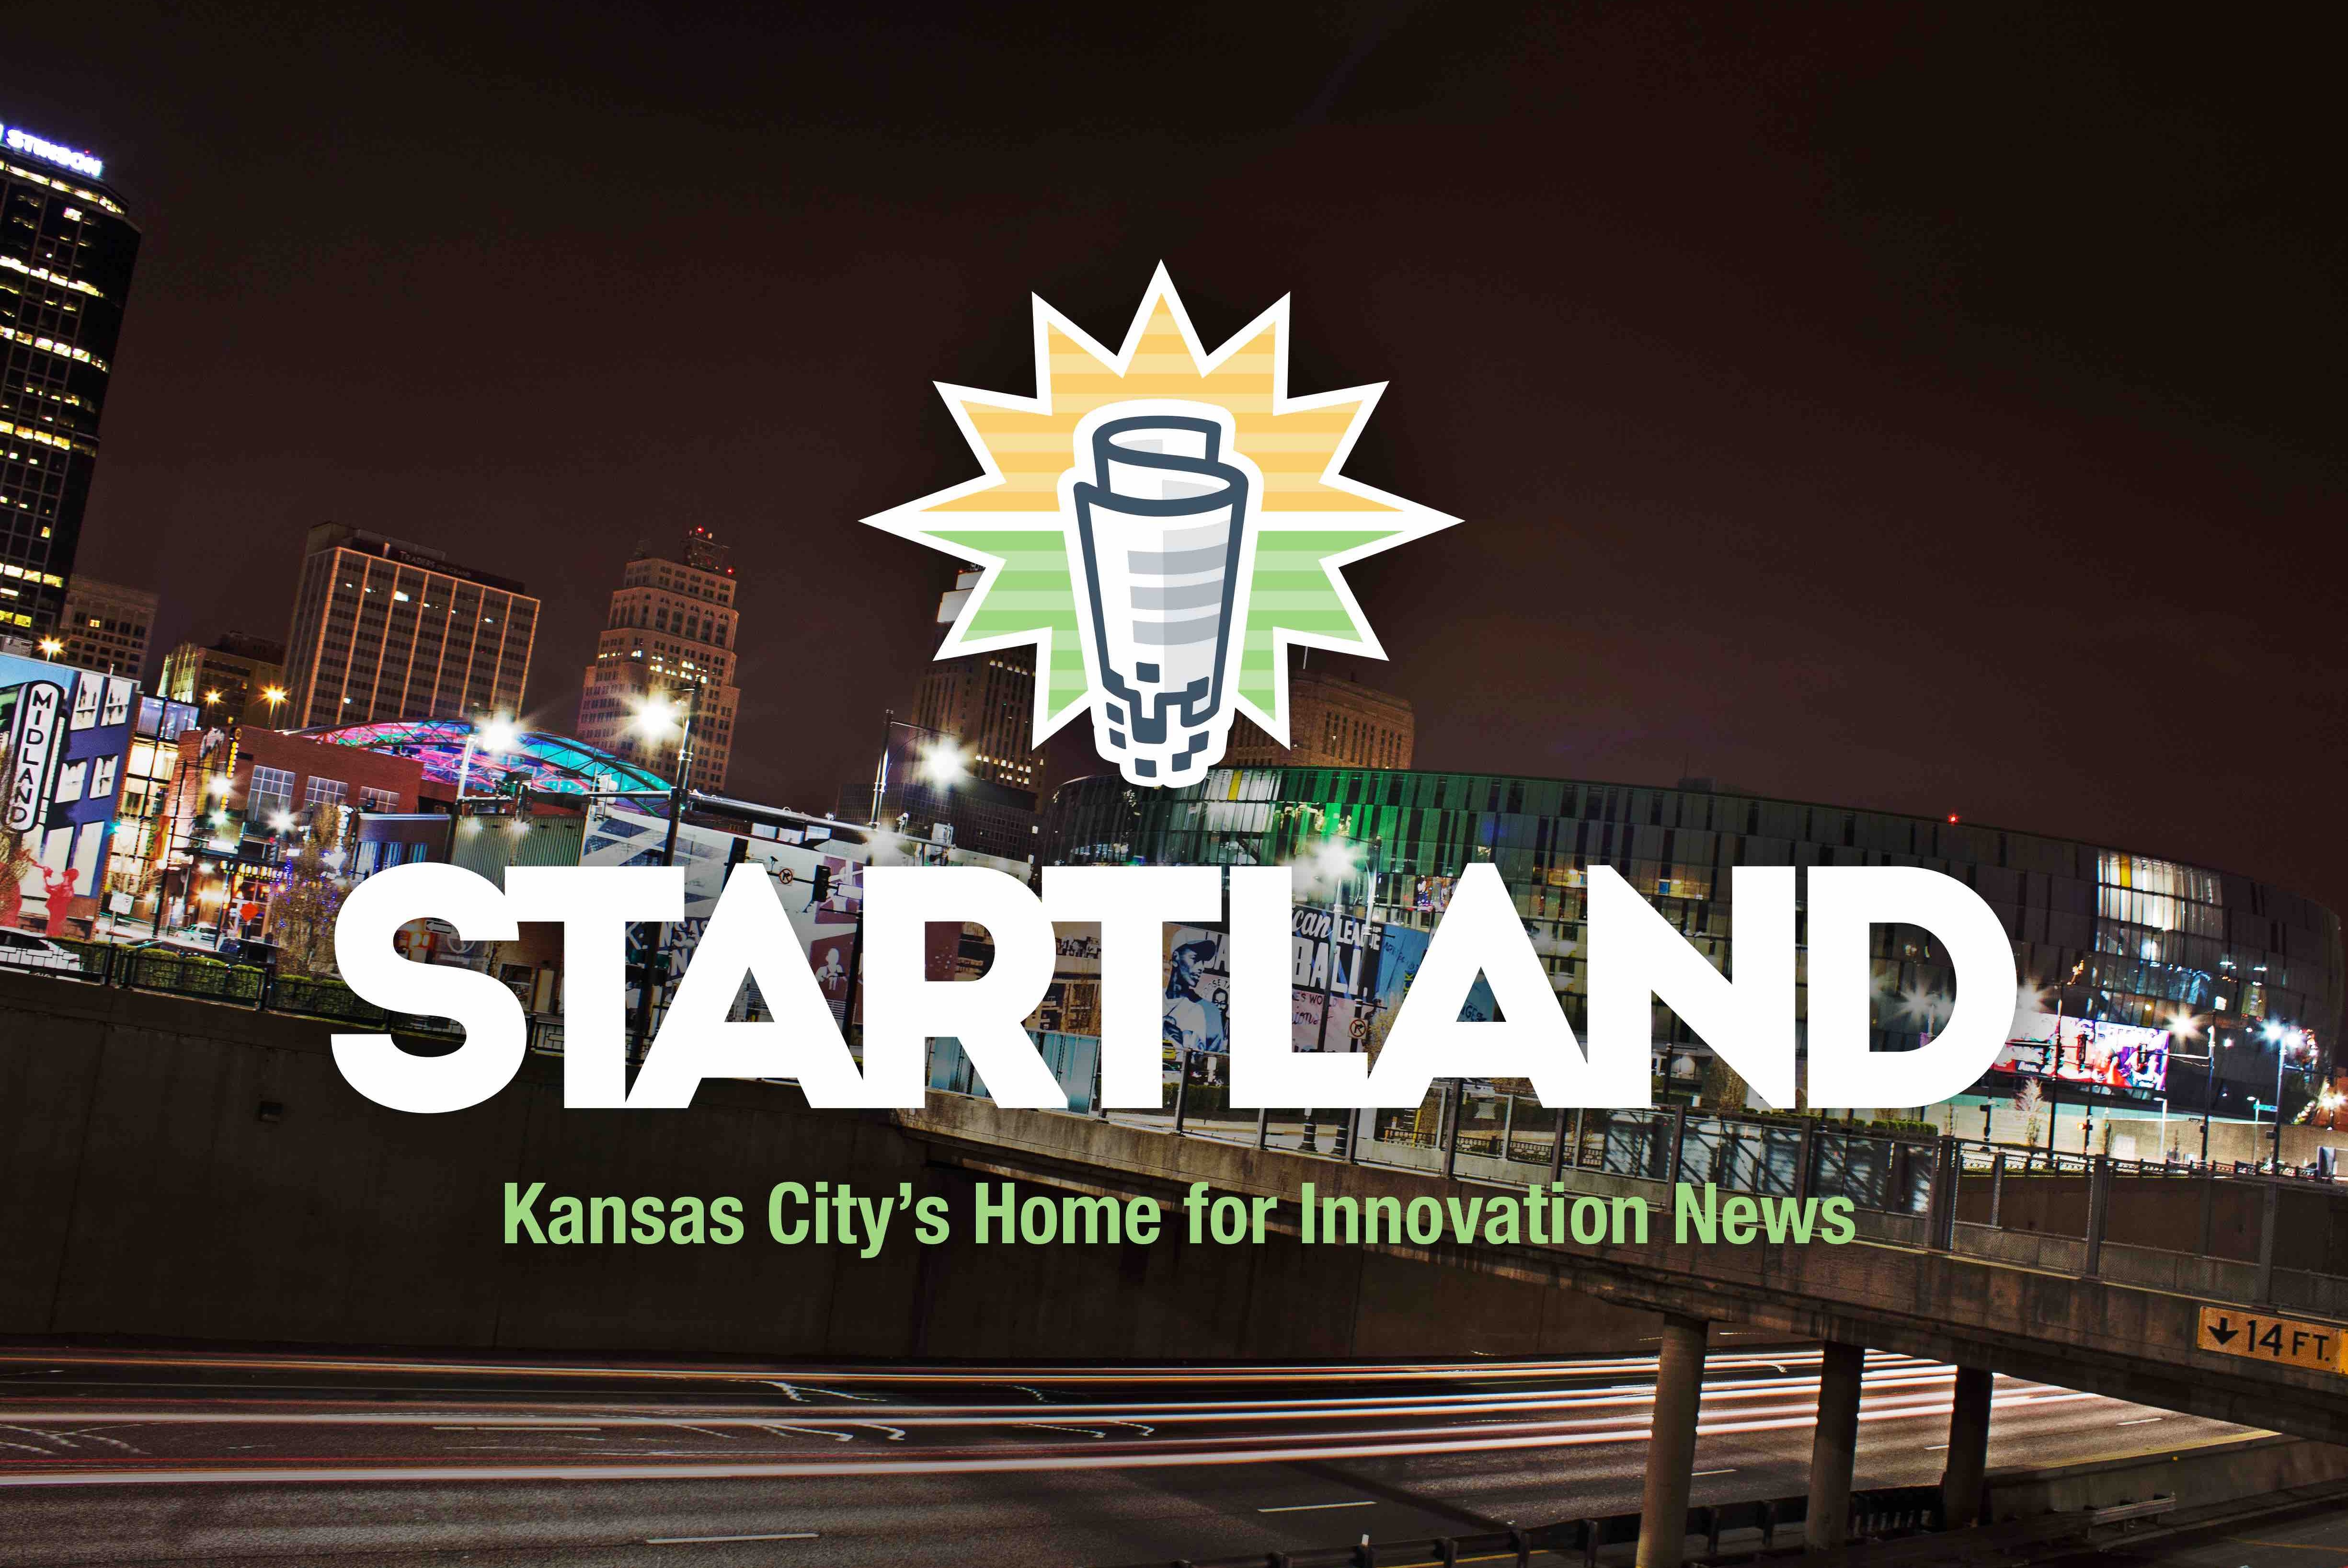 Startland News wins 2017 EDCKC Cornerstone award